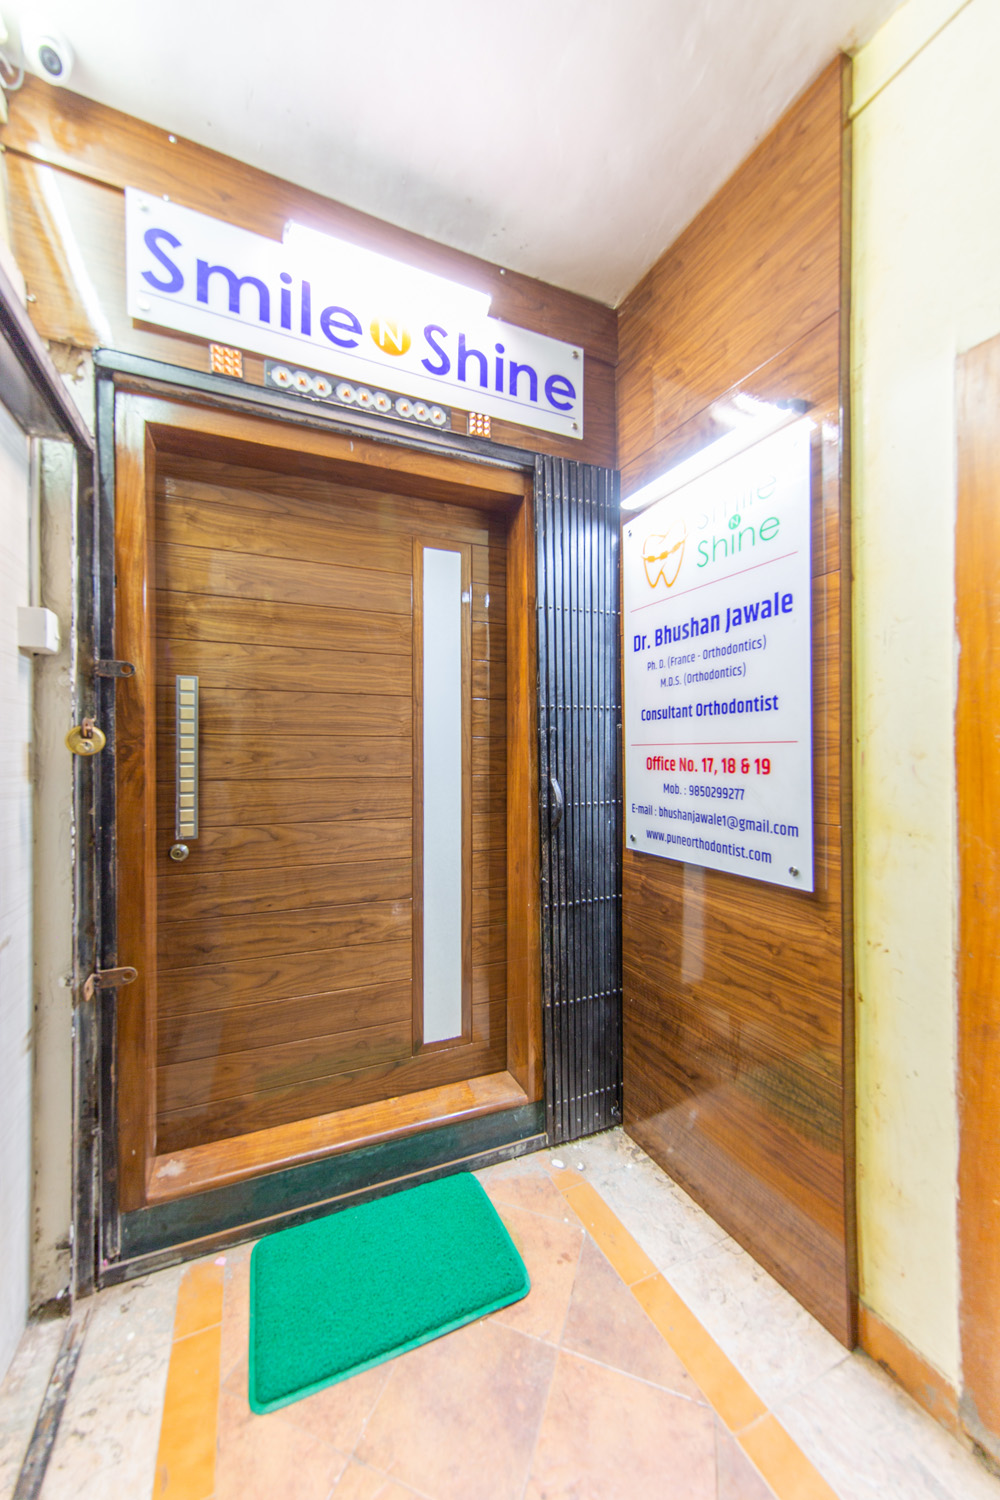 Smile-N-Shine Orthodontic Clinic